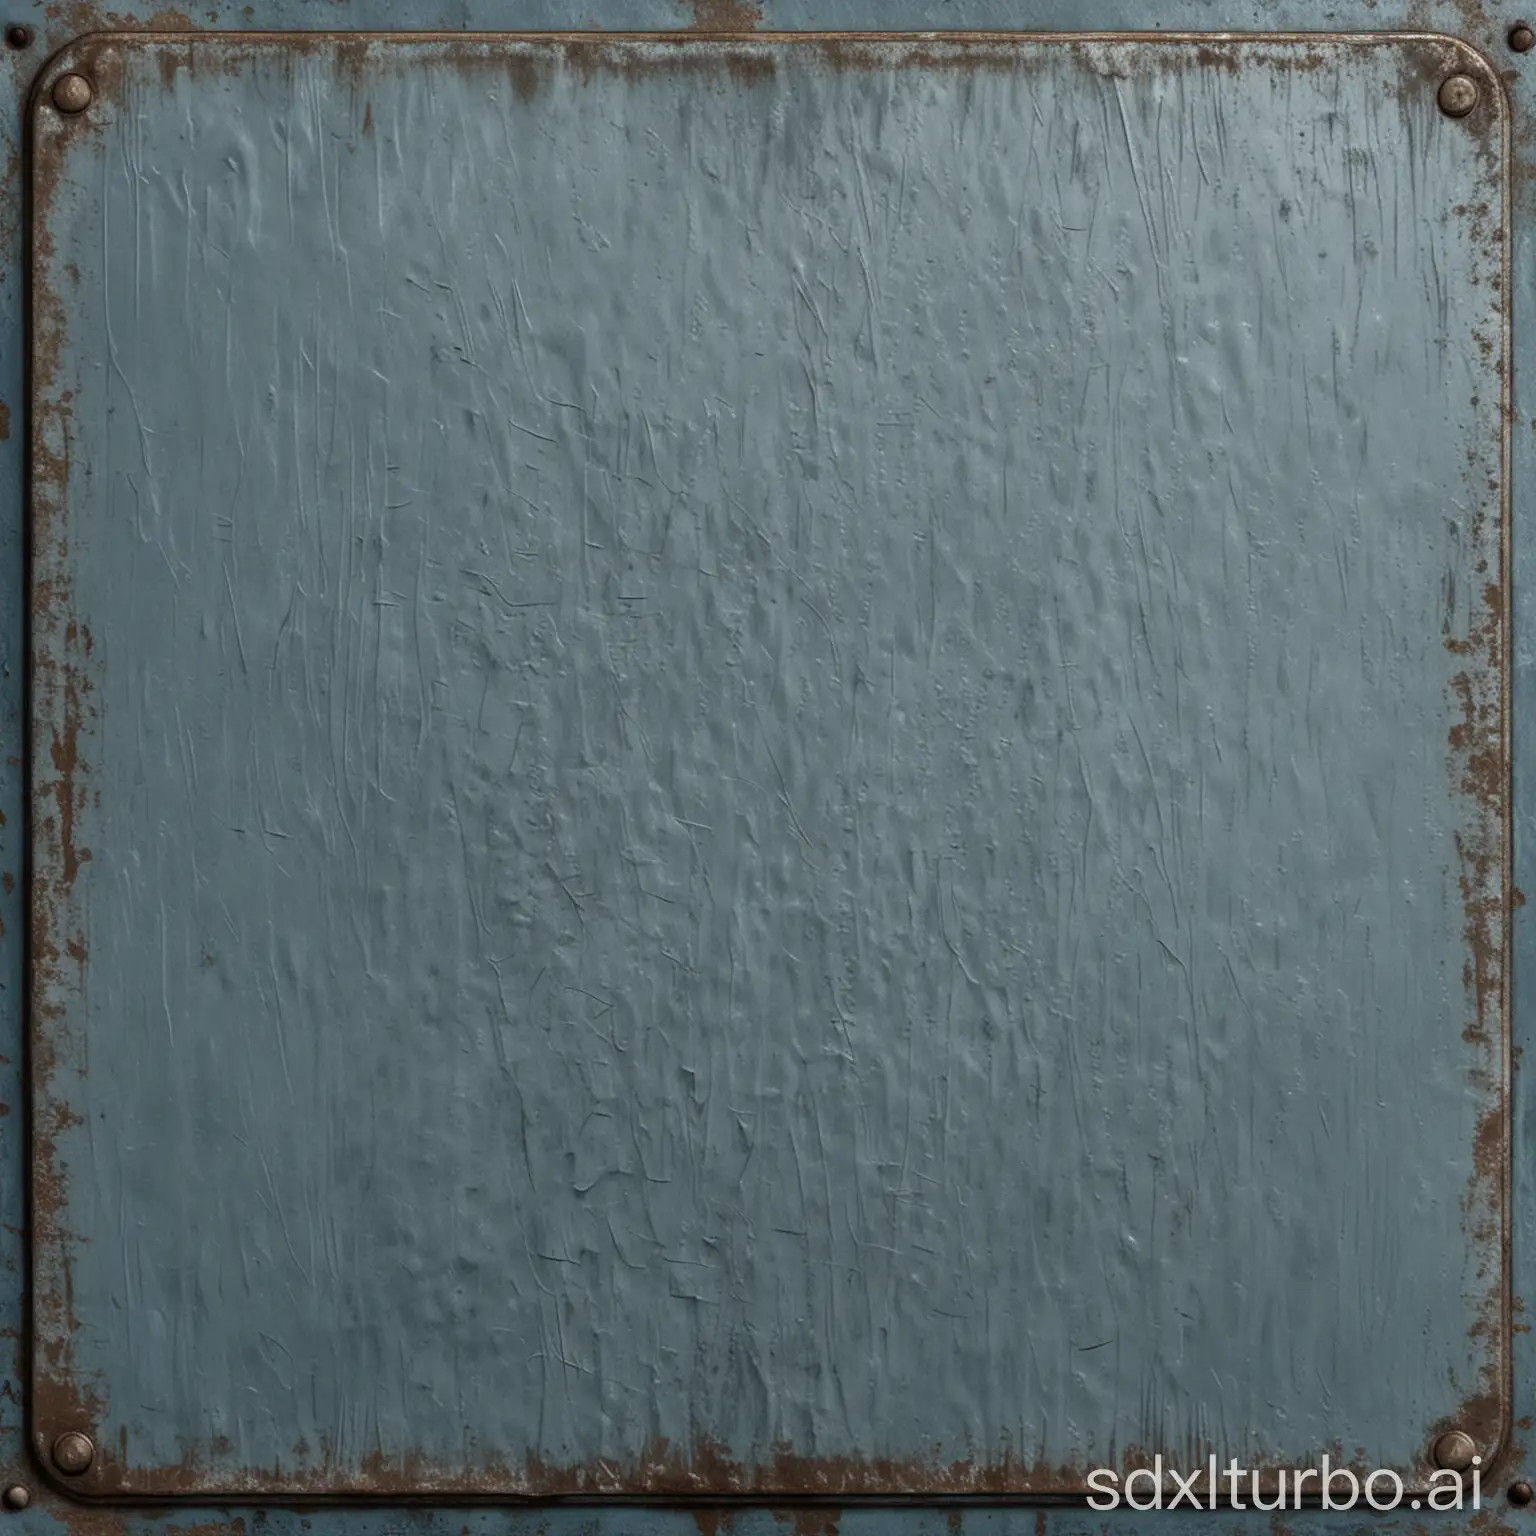 a blue gray metal texture, squad plates